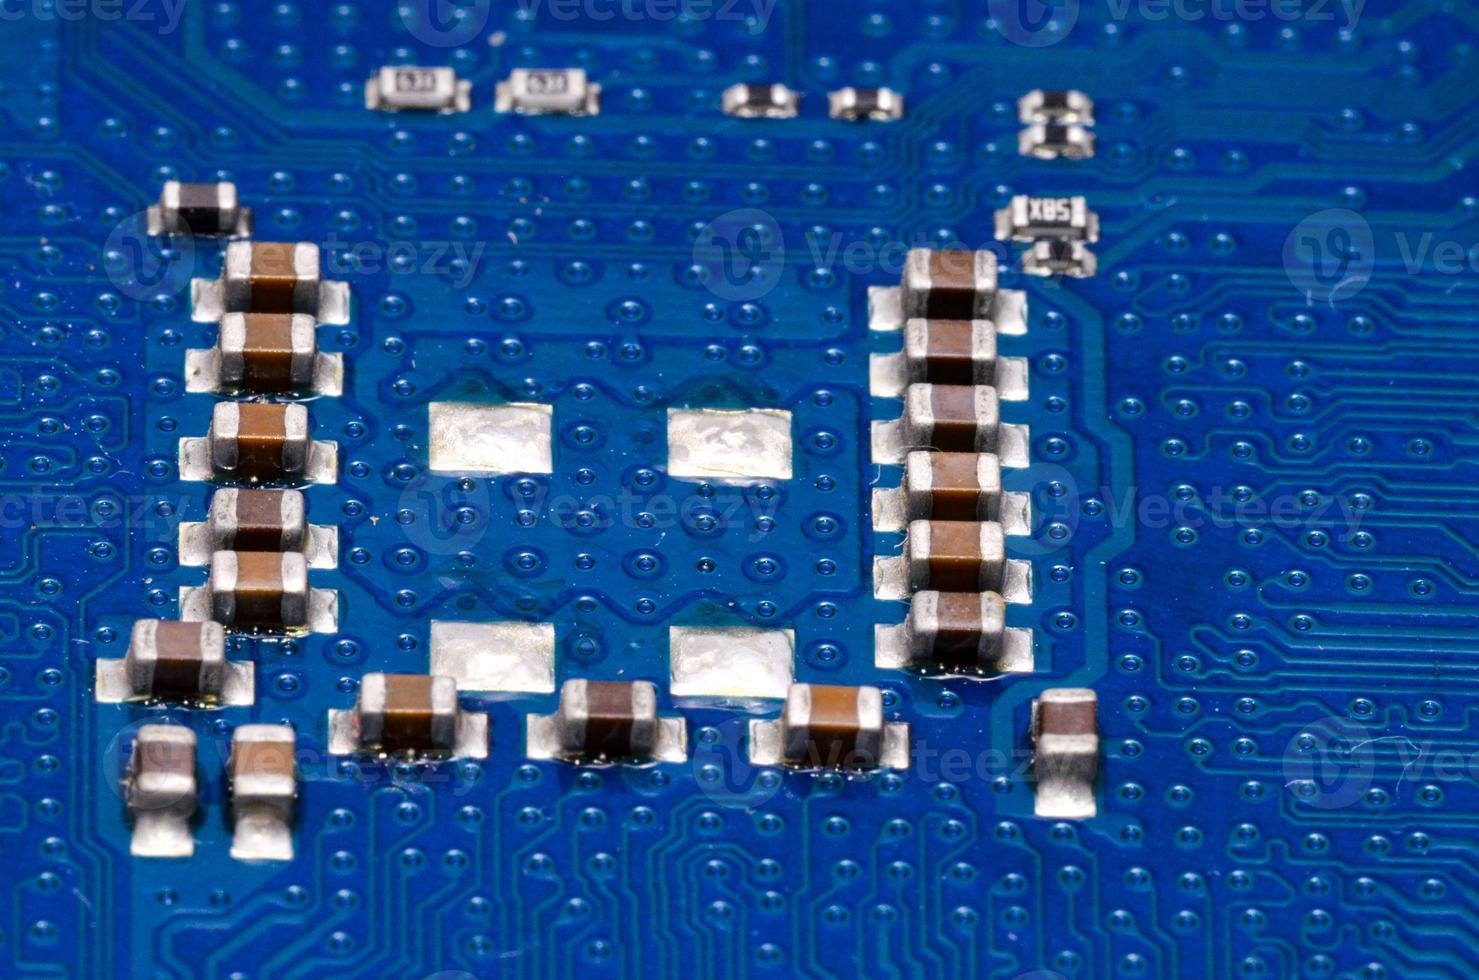 dator chip krets närbild foto